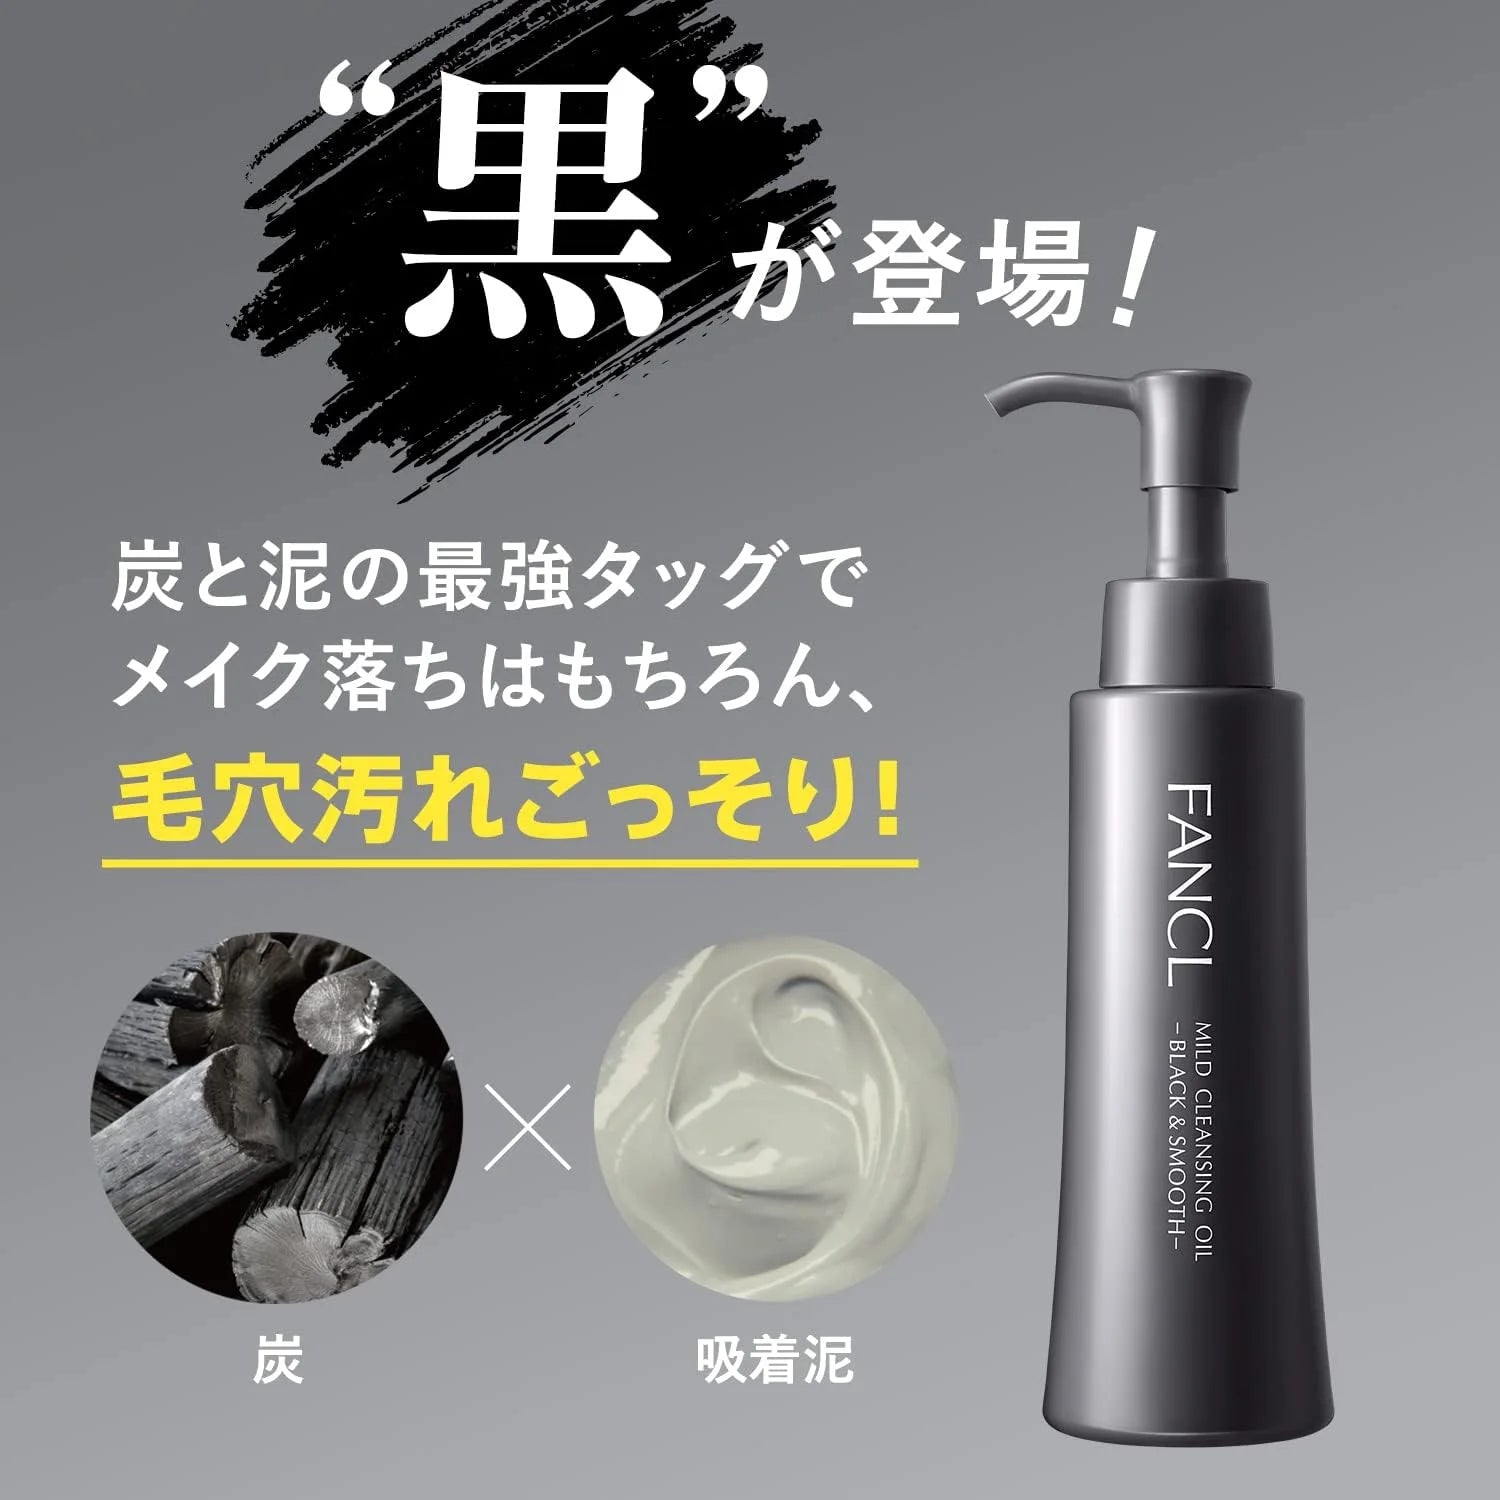 Fancl Mild Cleansing Oil Black & Smooth 120ml - Buy Me Japan